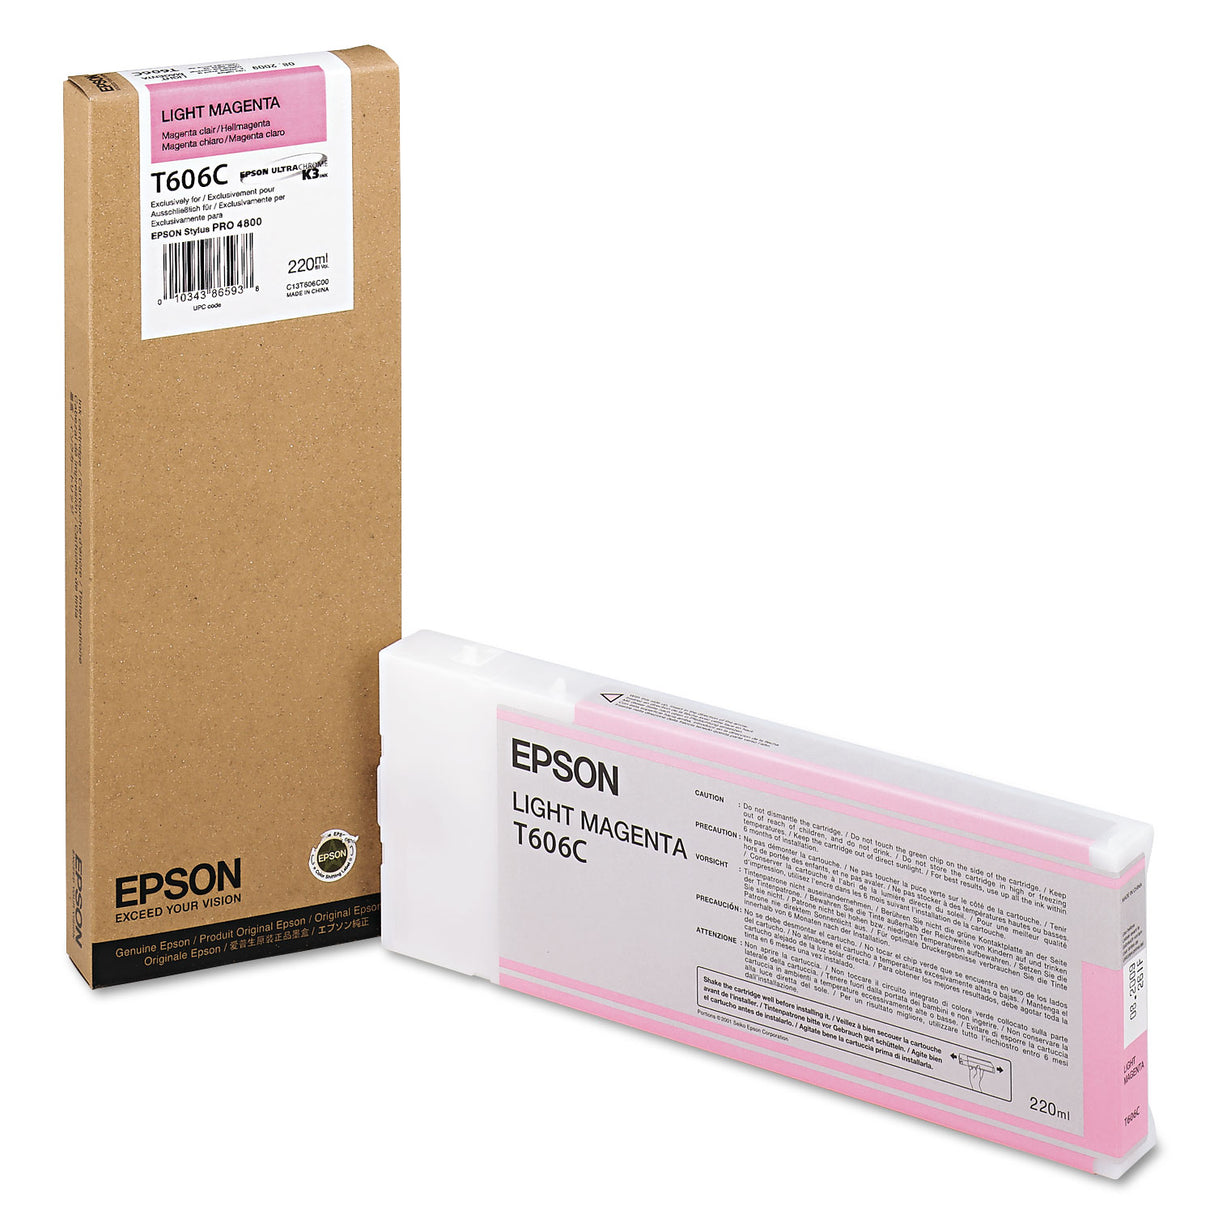 Epson T606C - 220 Ml - Light Magenta - Original - Ink Cartridge - For Stylus Pro 4800 (T606C00)